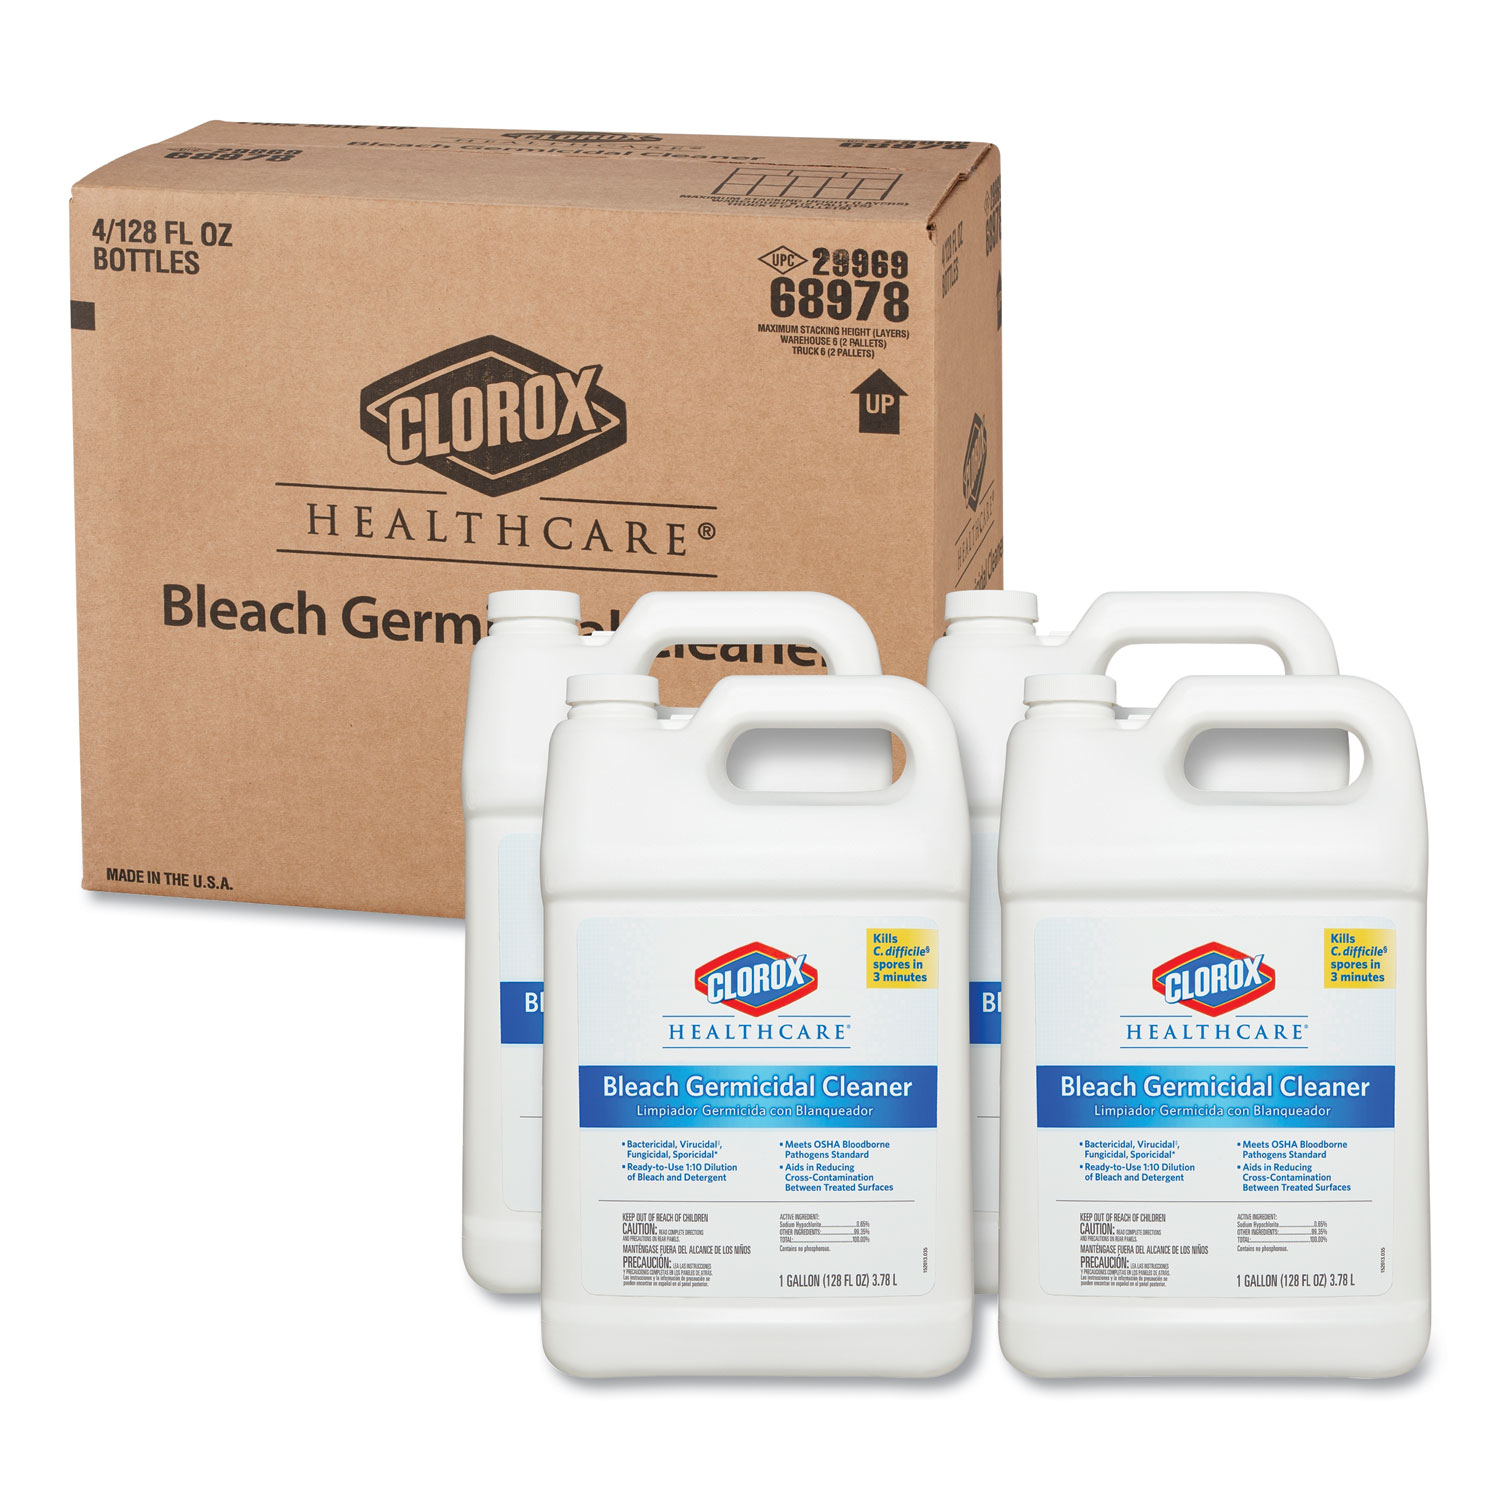  Clorox Healthcare CLO 68978 Bleach Germicidal Cleaner, 128 oz Refill Bottle, 4/Carton (CLO68978) 